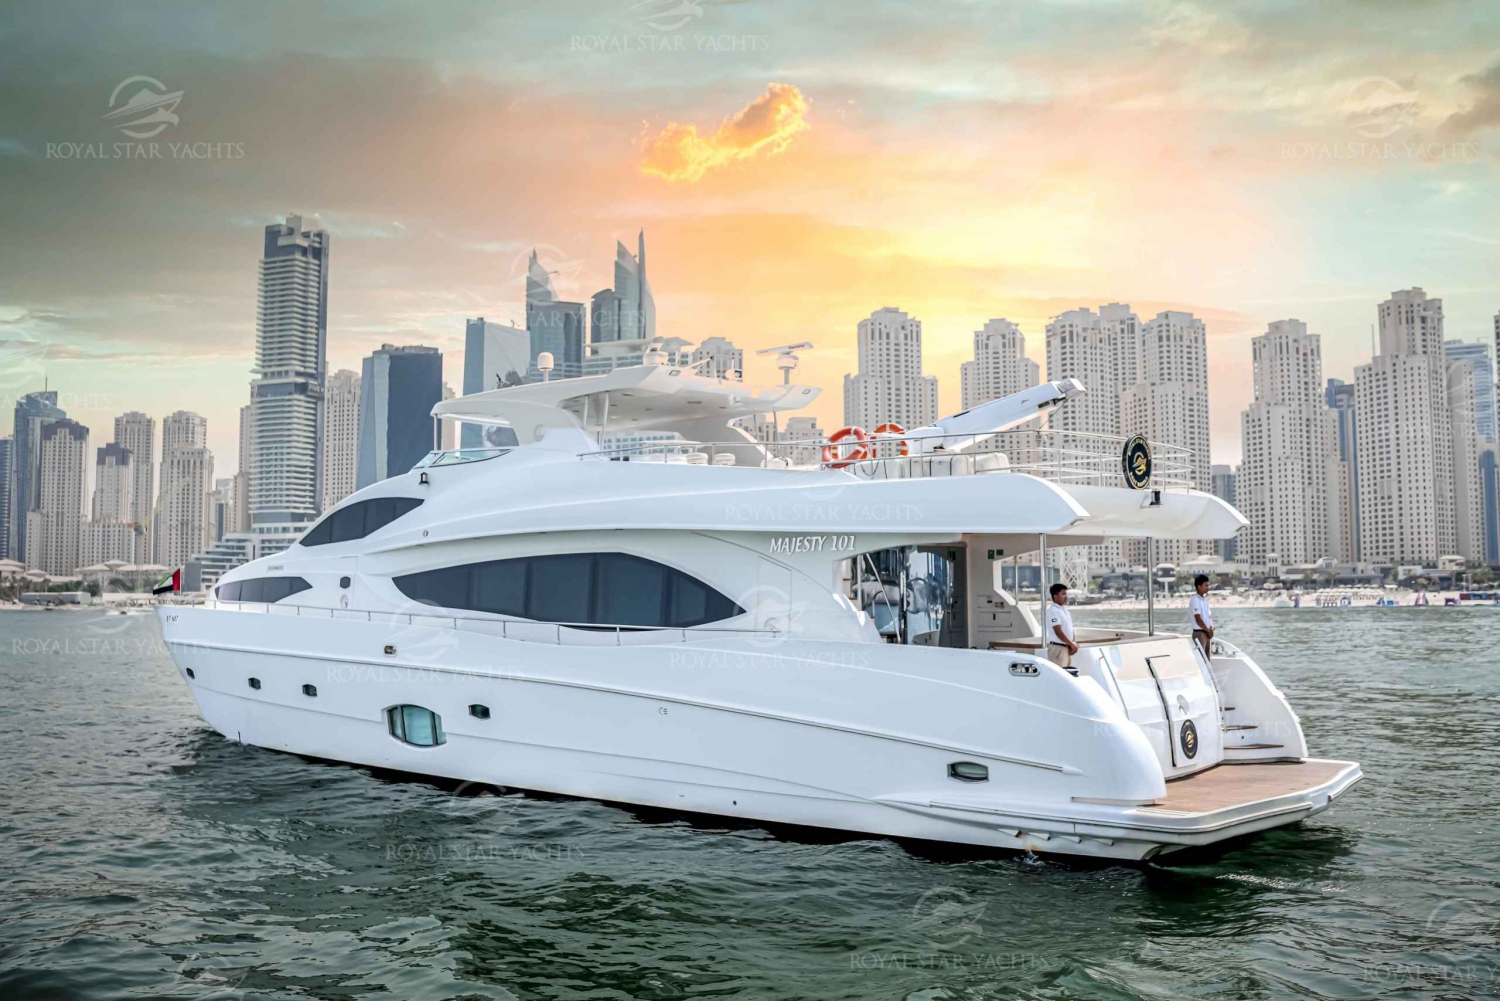 101 FT MAJESTY - Luxury Yacht Tour at Dubai